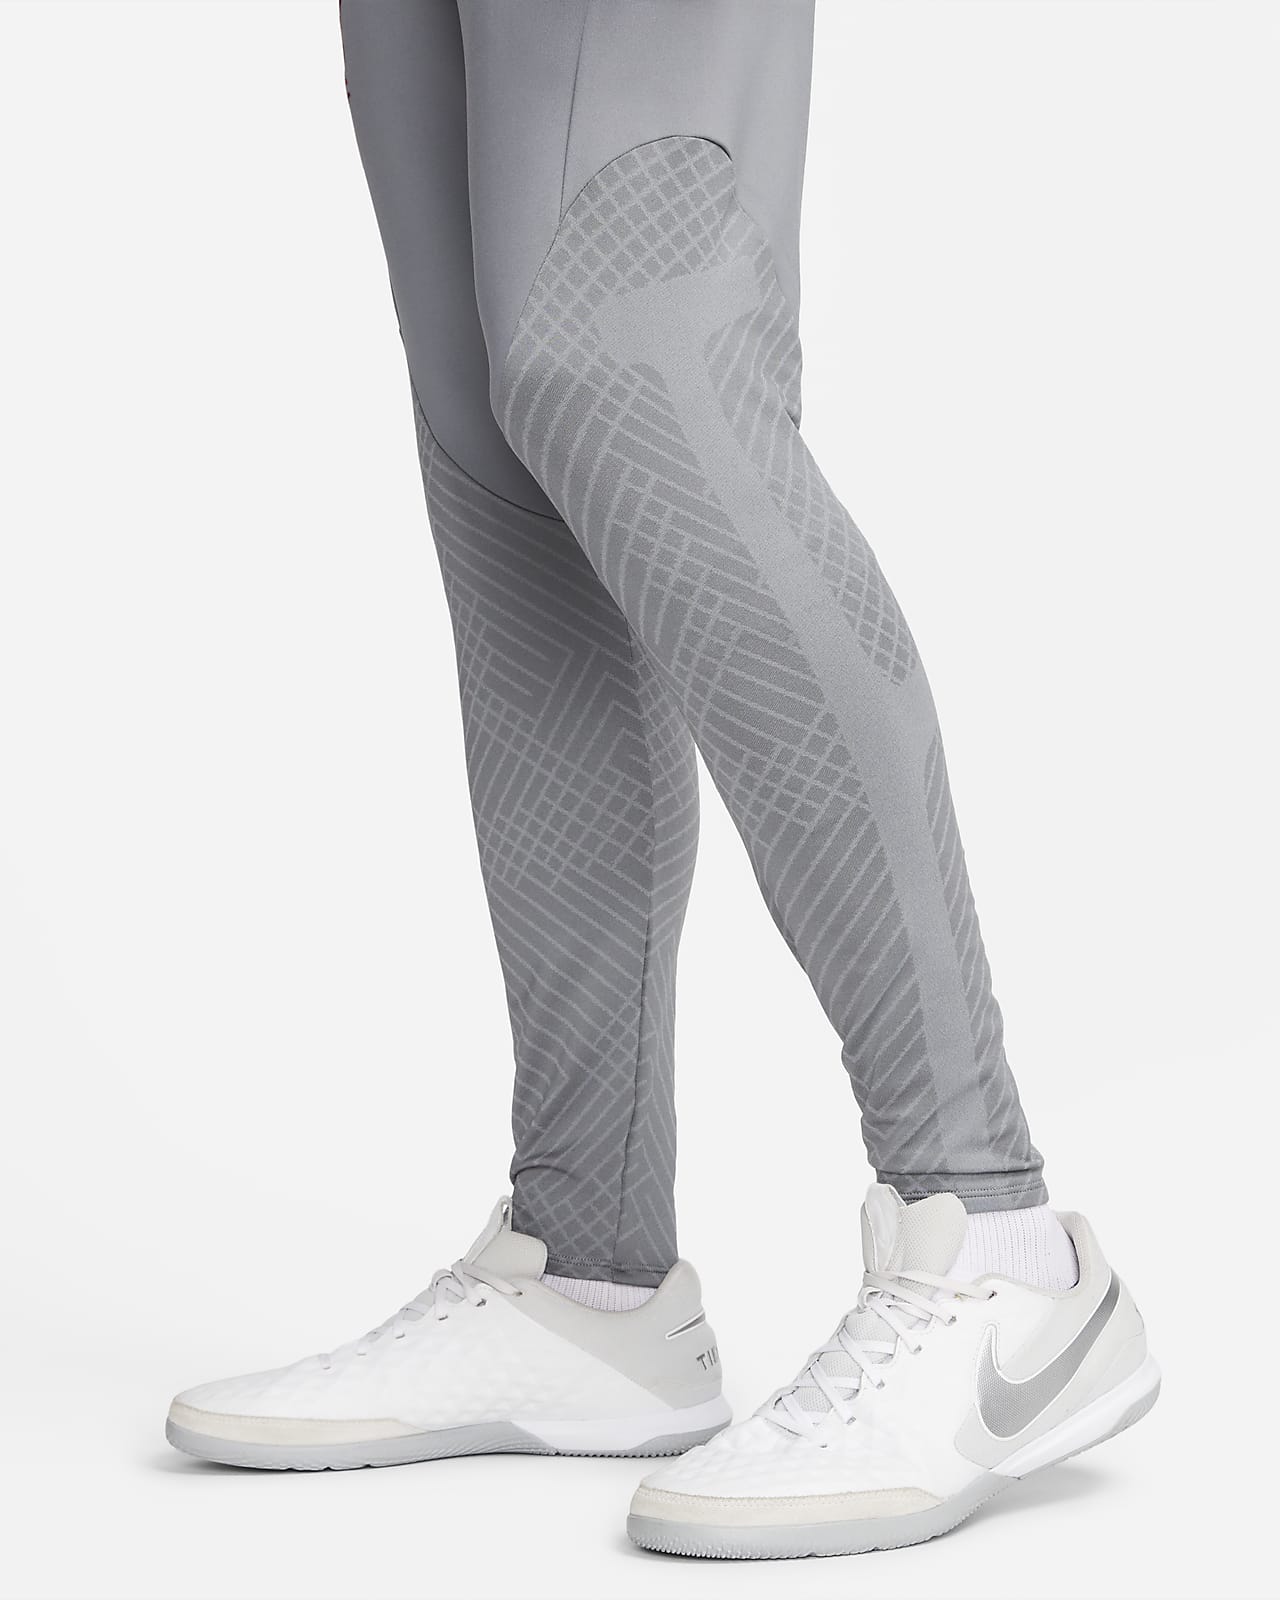 Football Trousers & Tights. Academy & Strike Pants. Nike CA